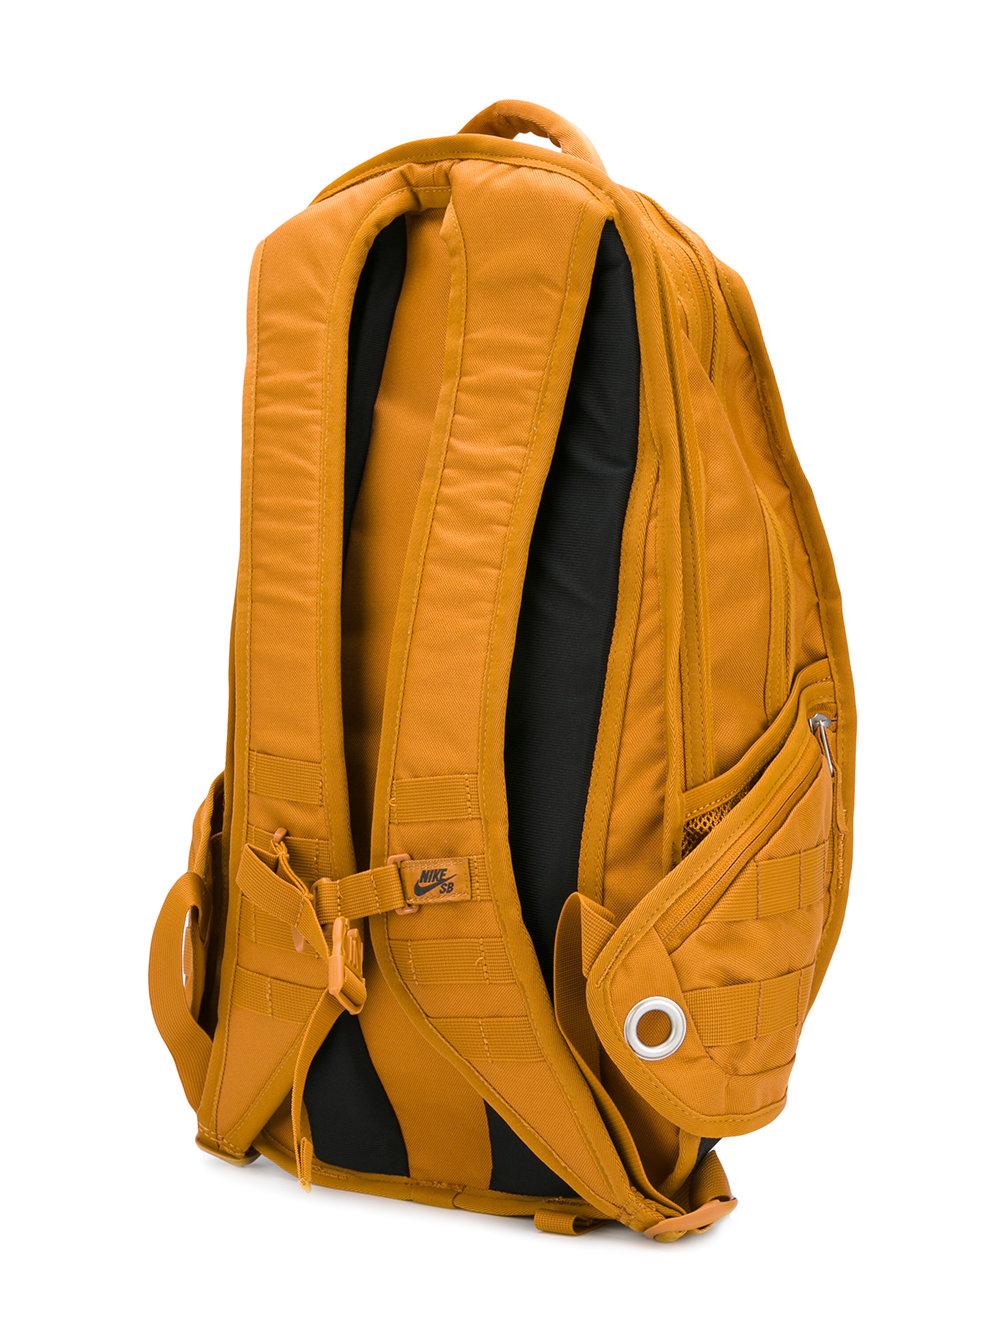 nike rpm backpack yellow